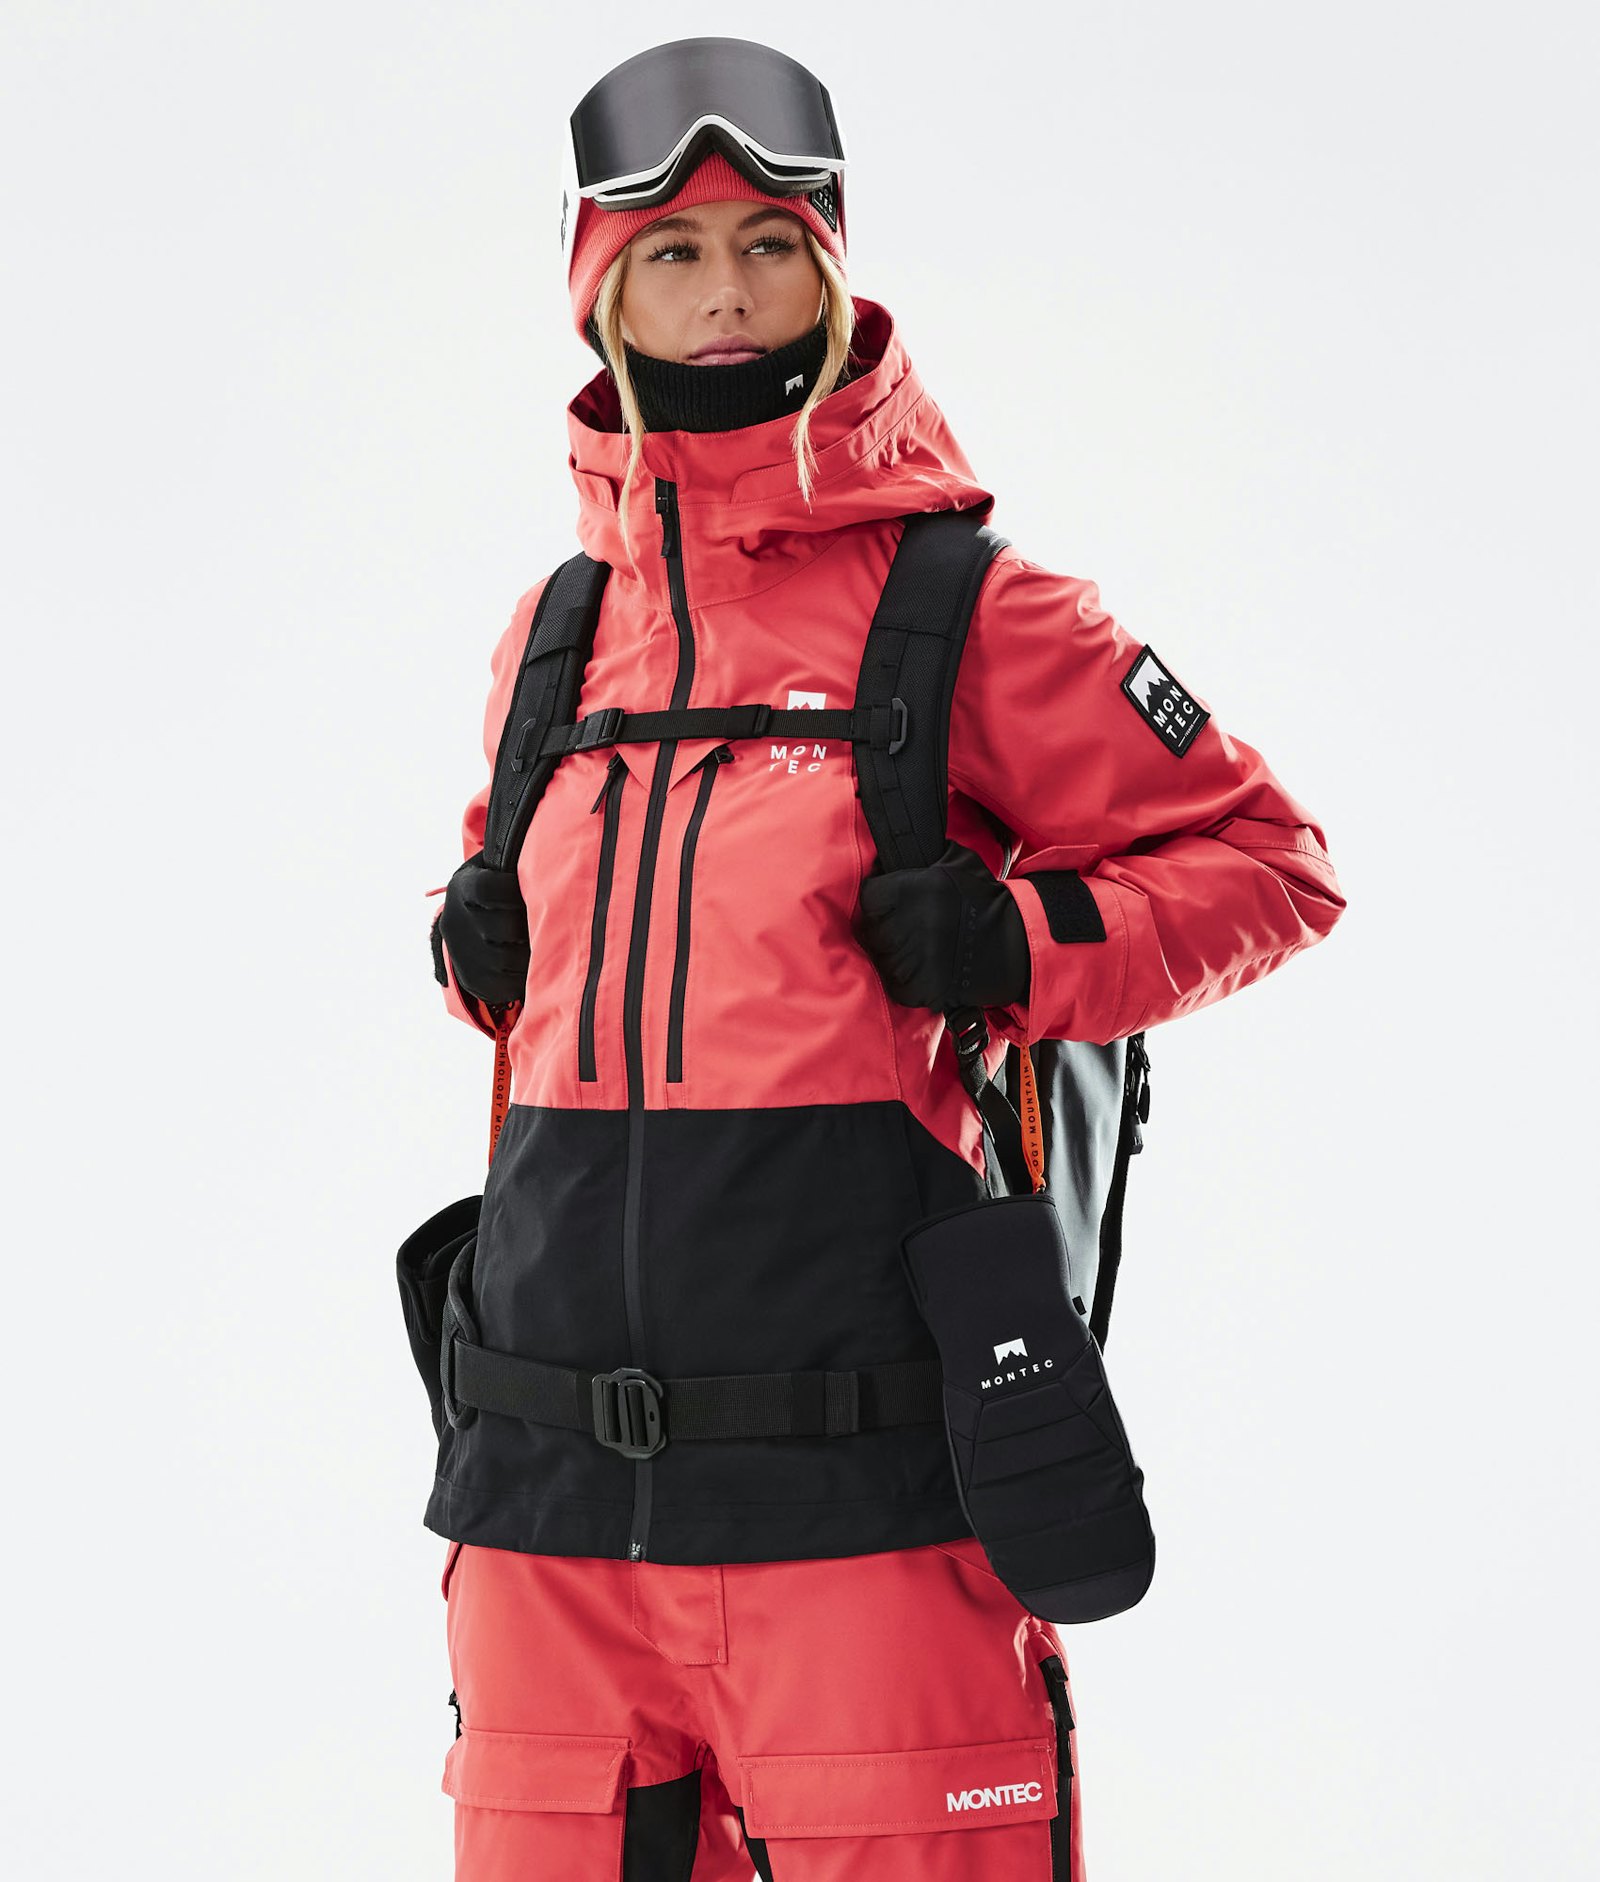 Moss W 2021 Veste Snowboard Femme Coral/Black